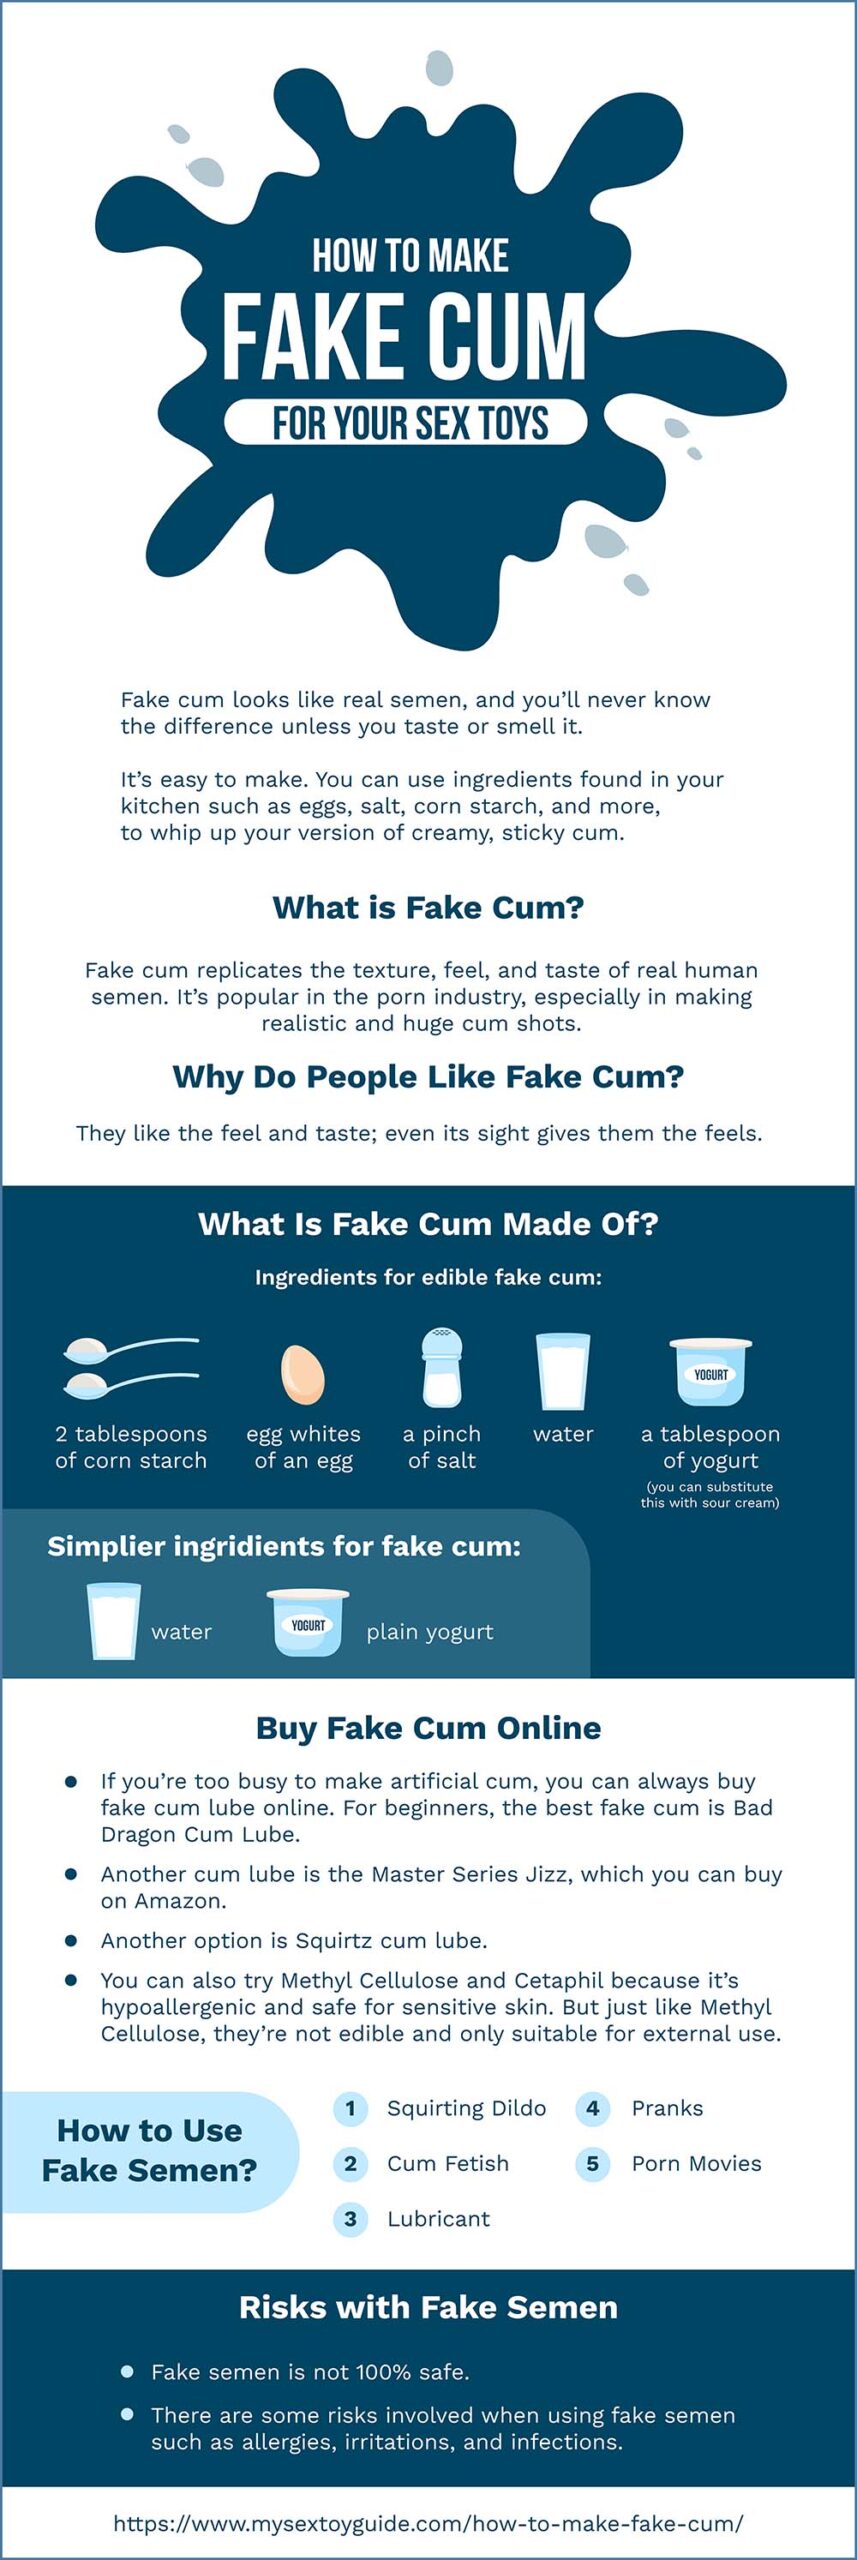 How to Make Fake Cum Infographic